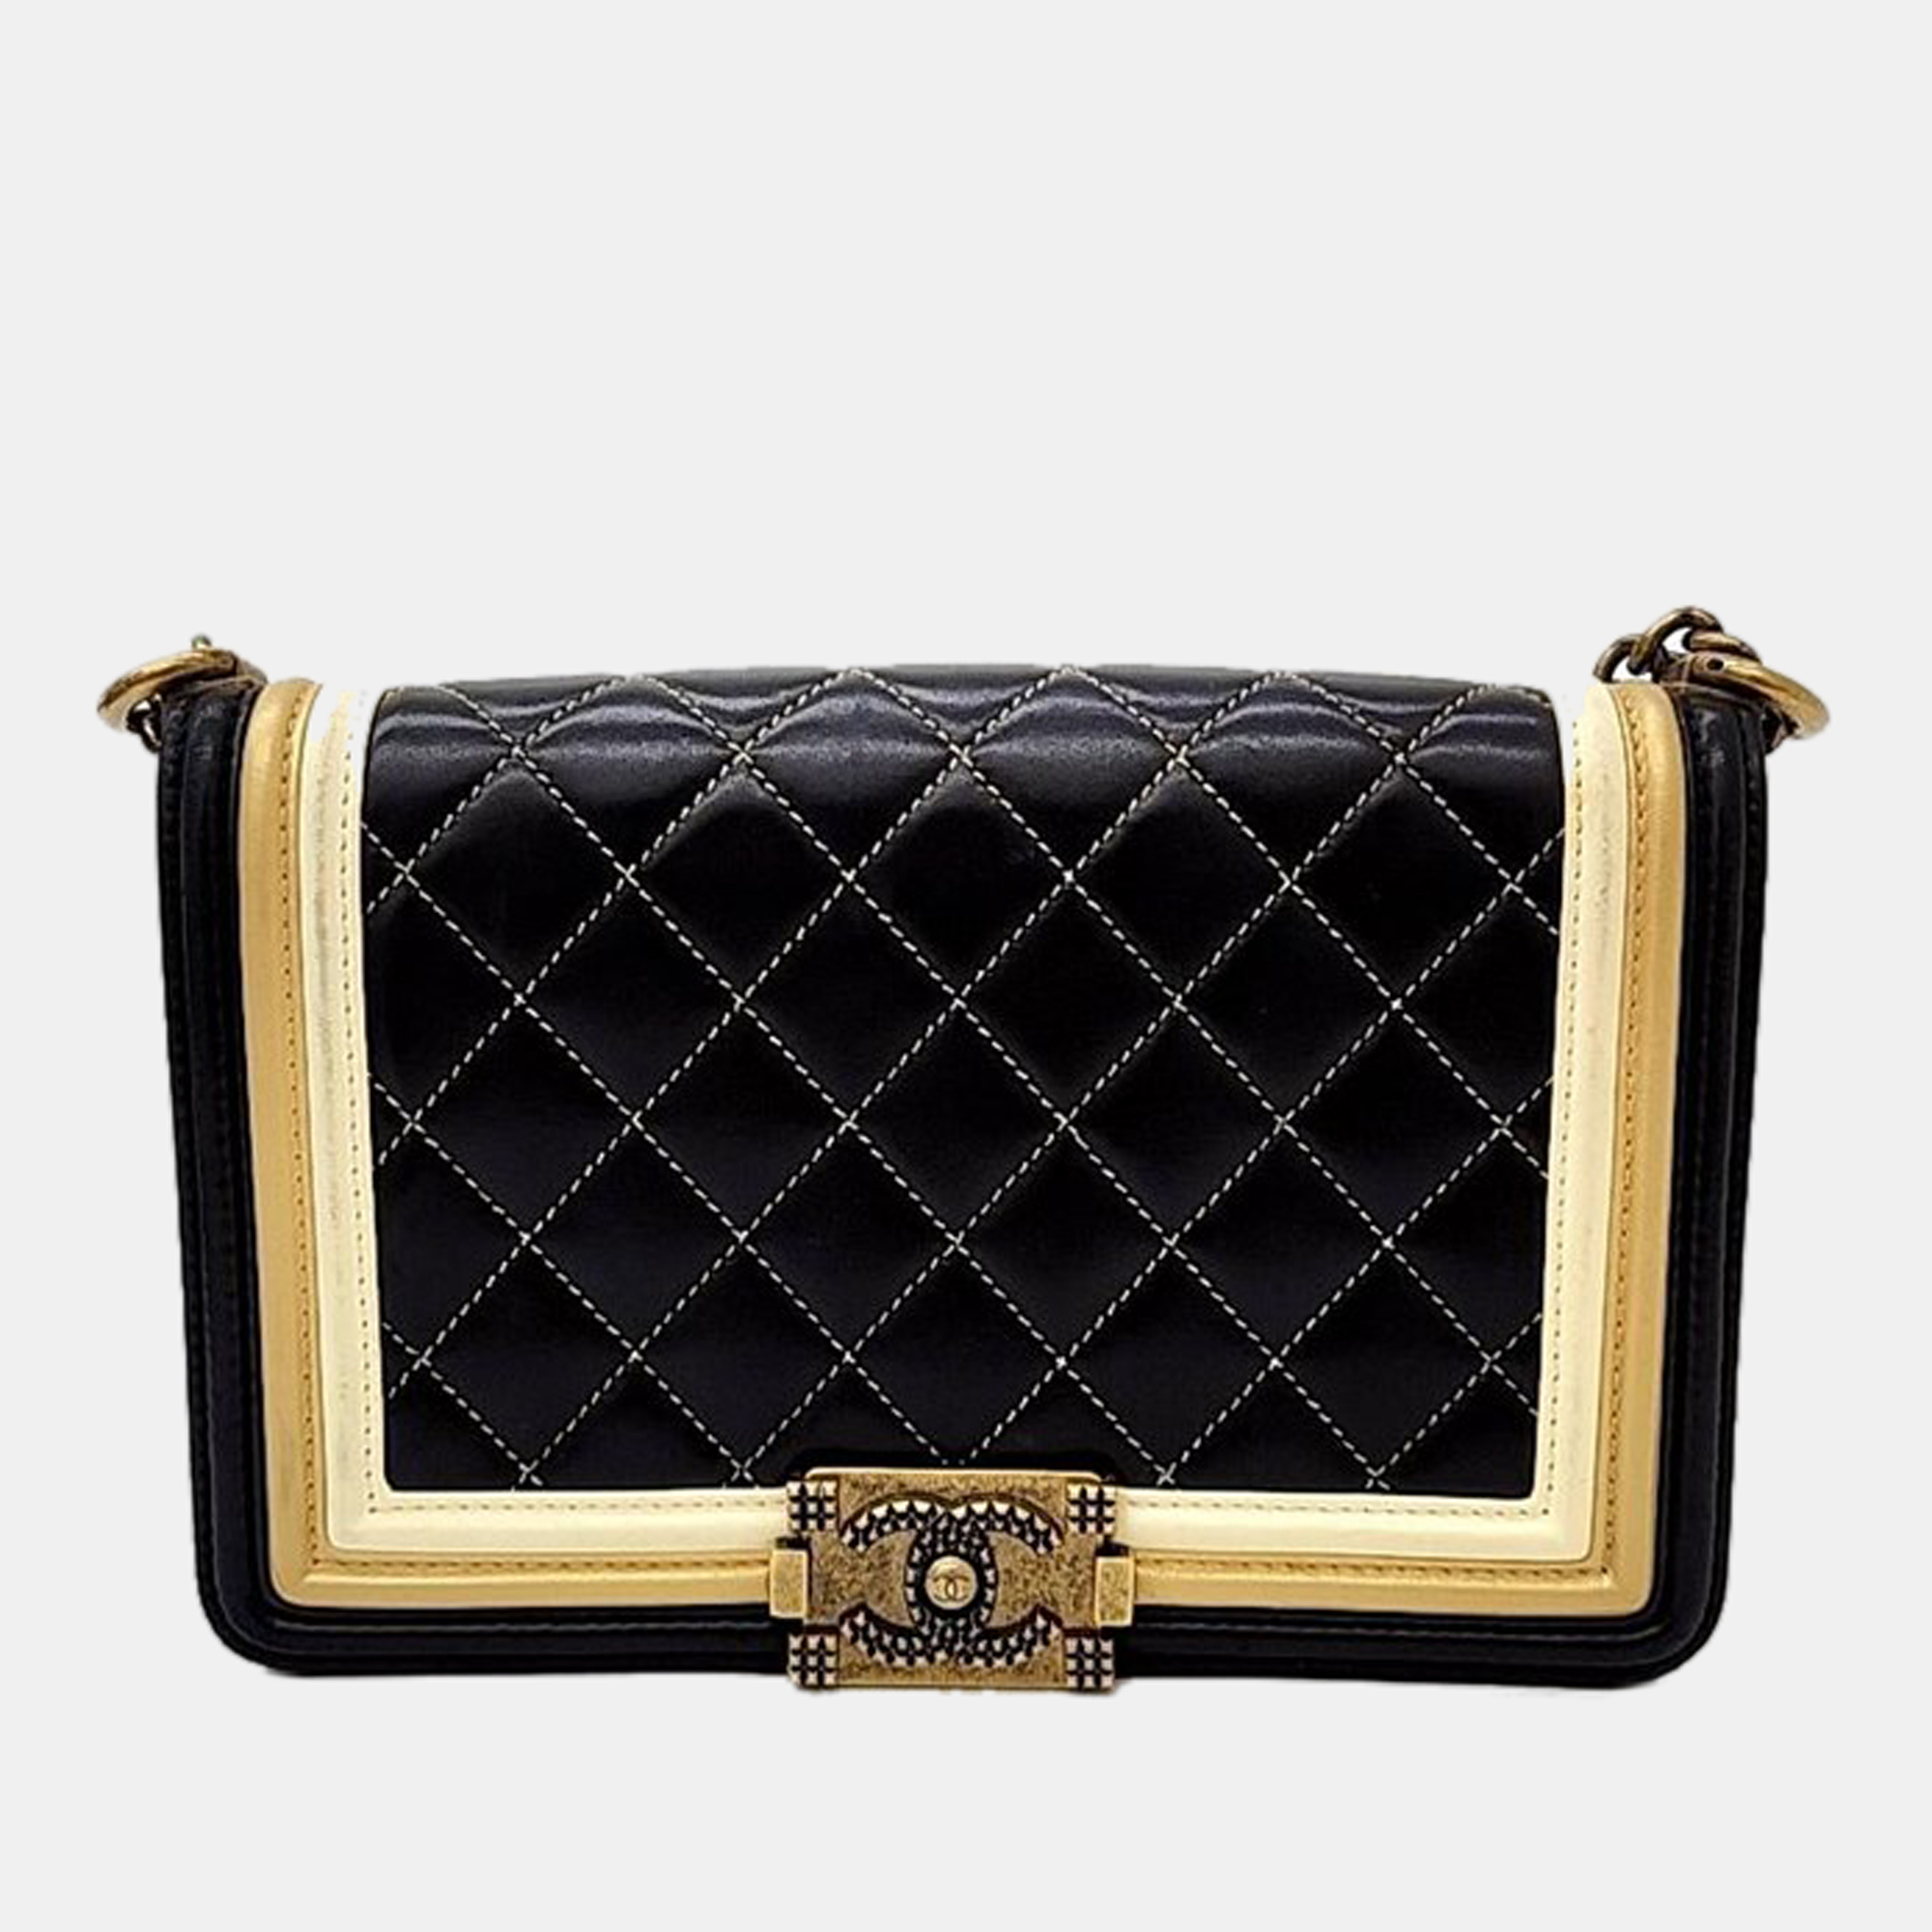 Chanel black/gold leather boy flap bag